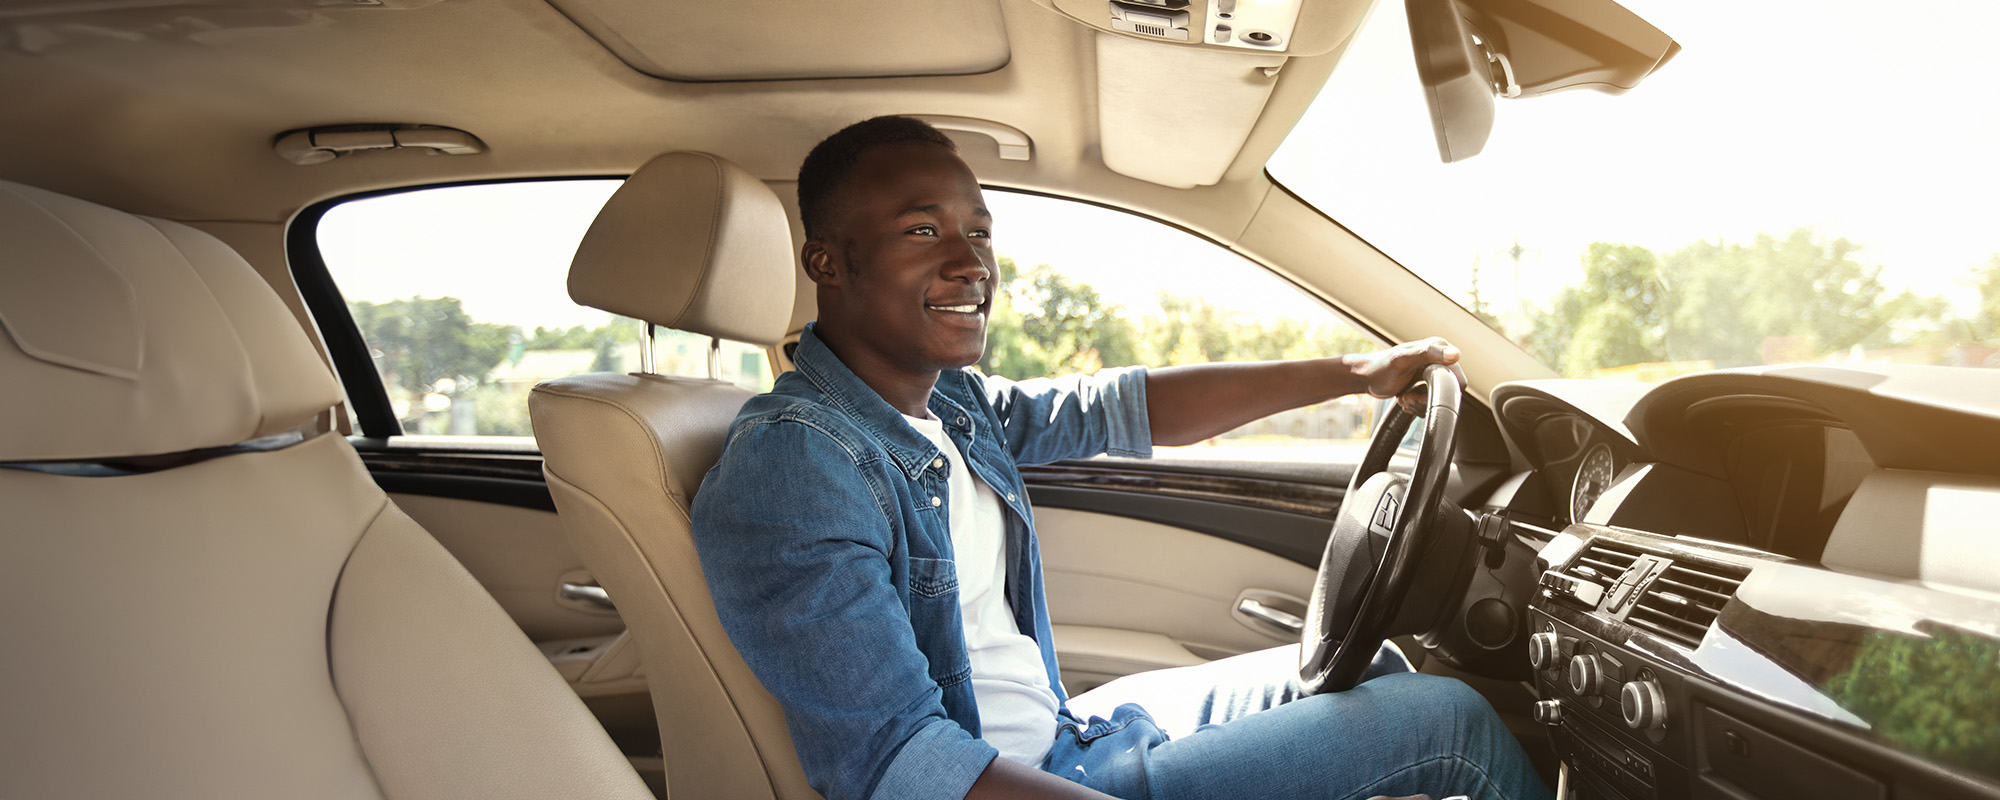 happy black guy driving car